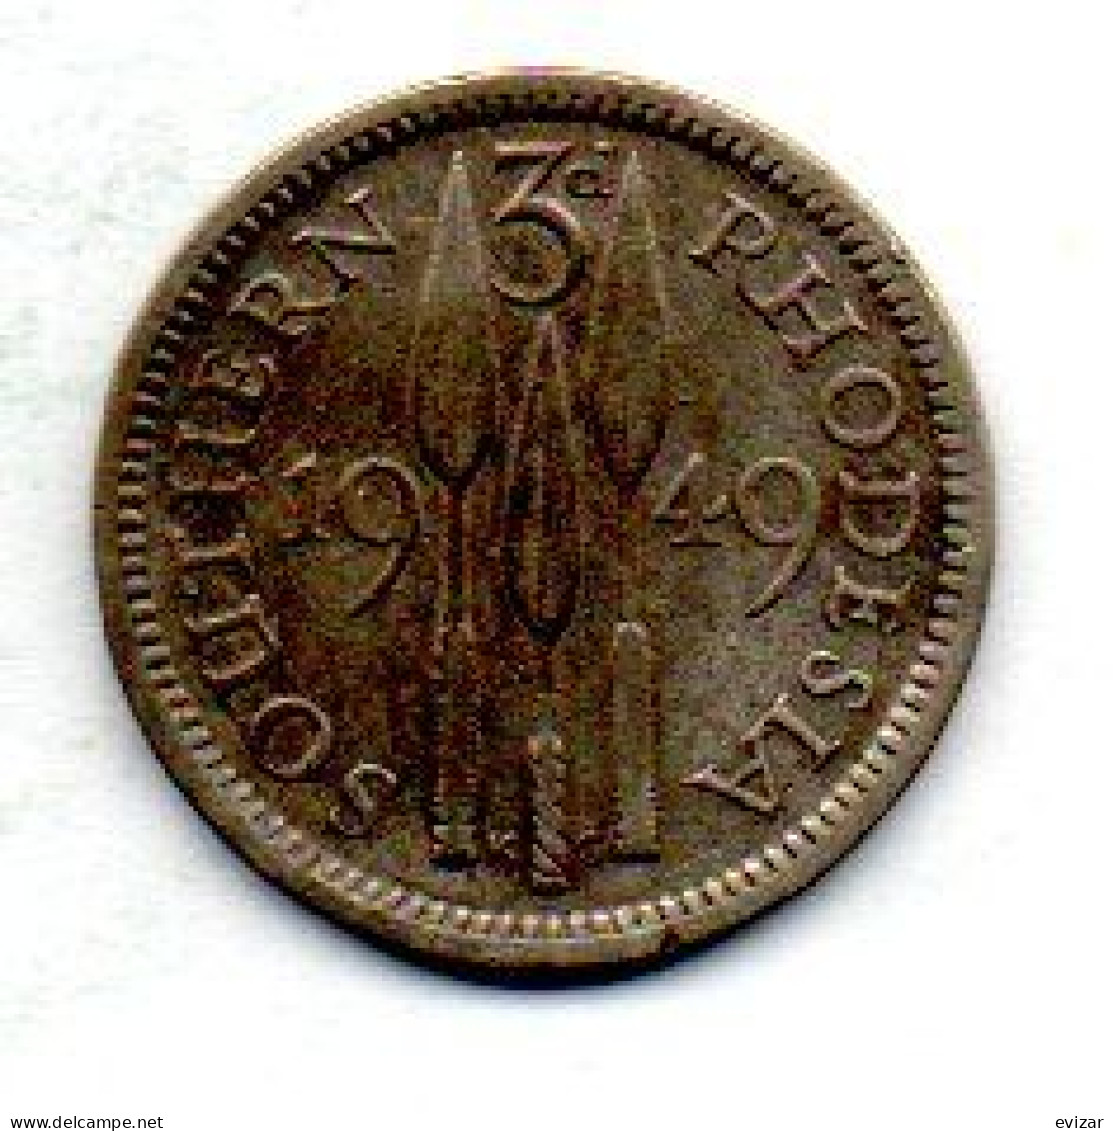 SOUTHERN RHODESIA, 3 Pence, Copper-Nickel, Year 1949, KM # 20 - Rhodesia